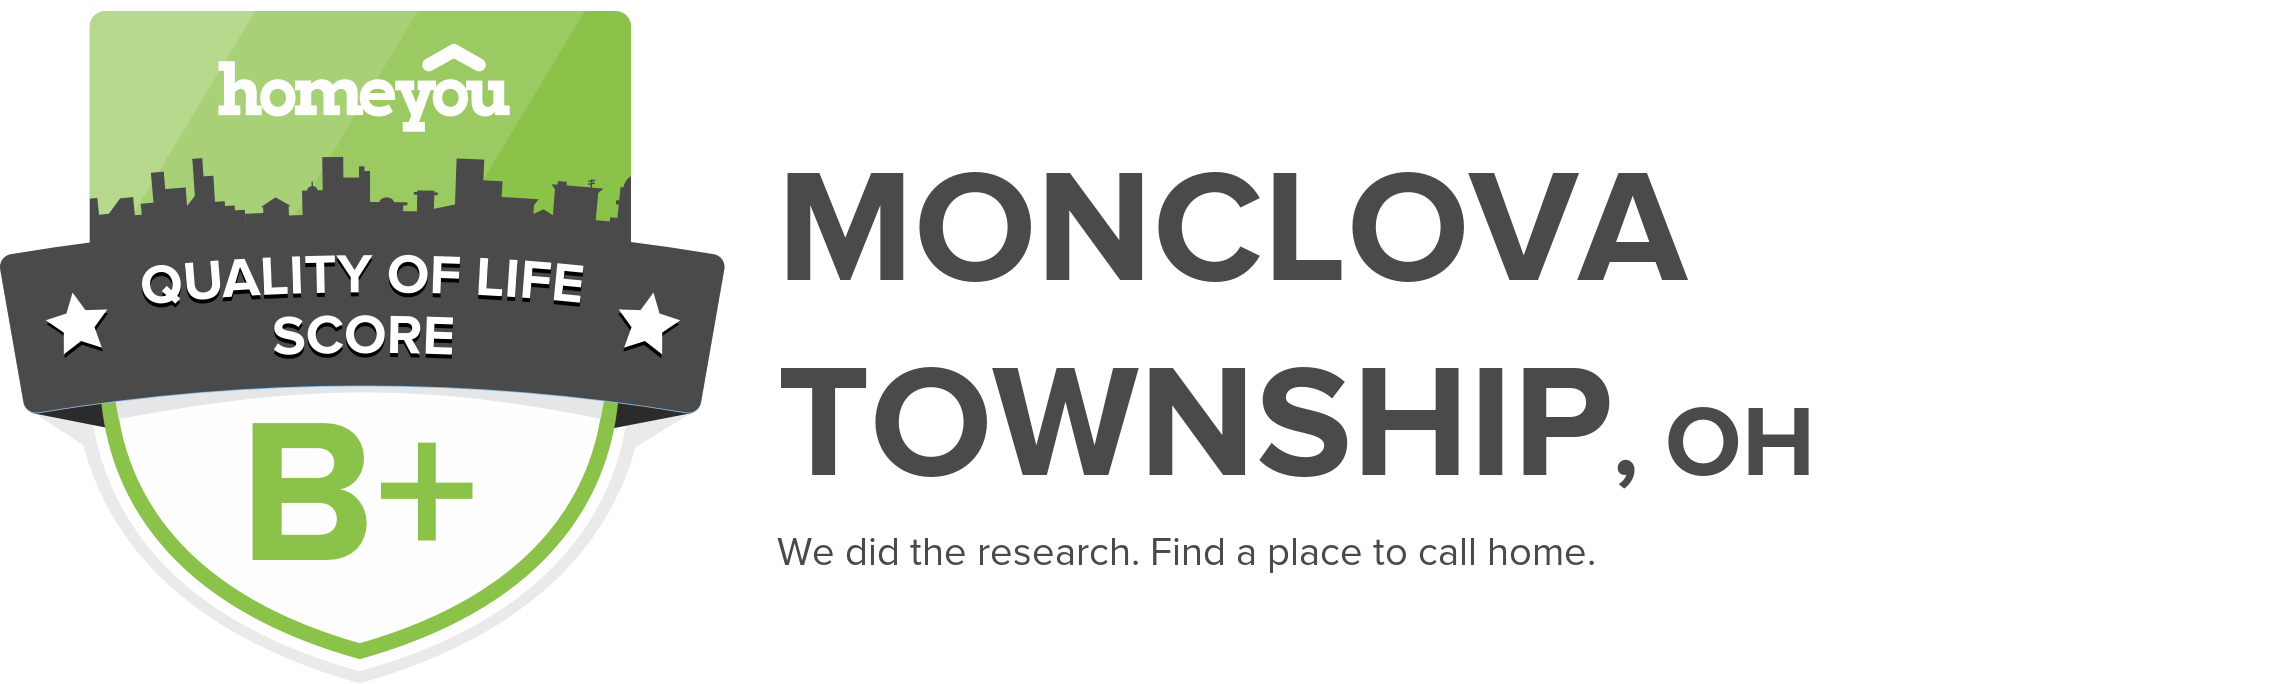 Monclova township, OH